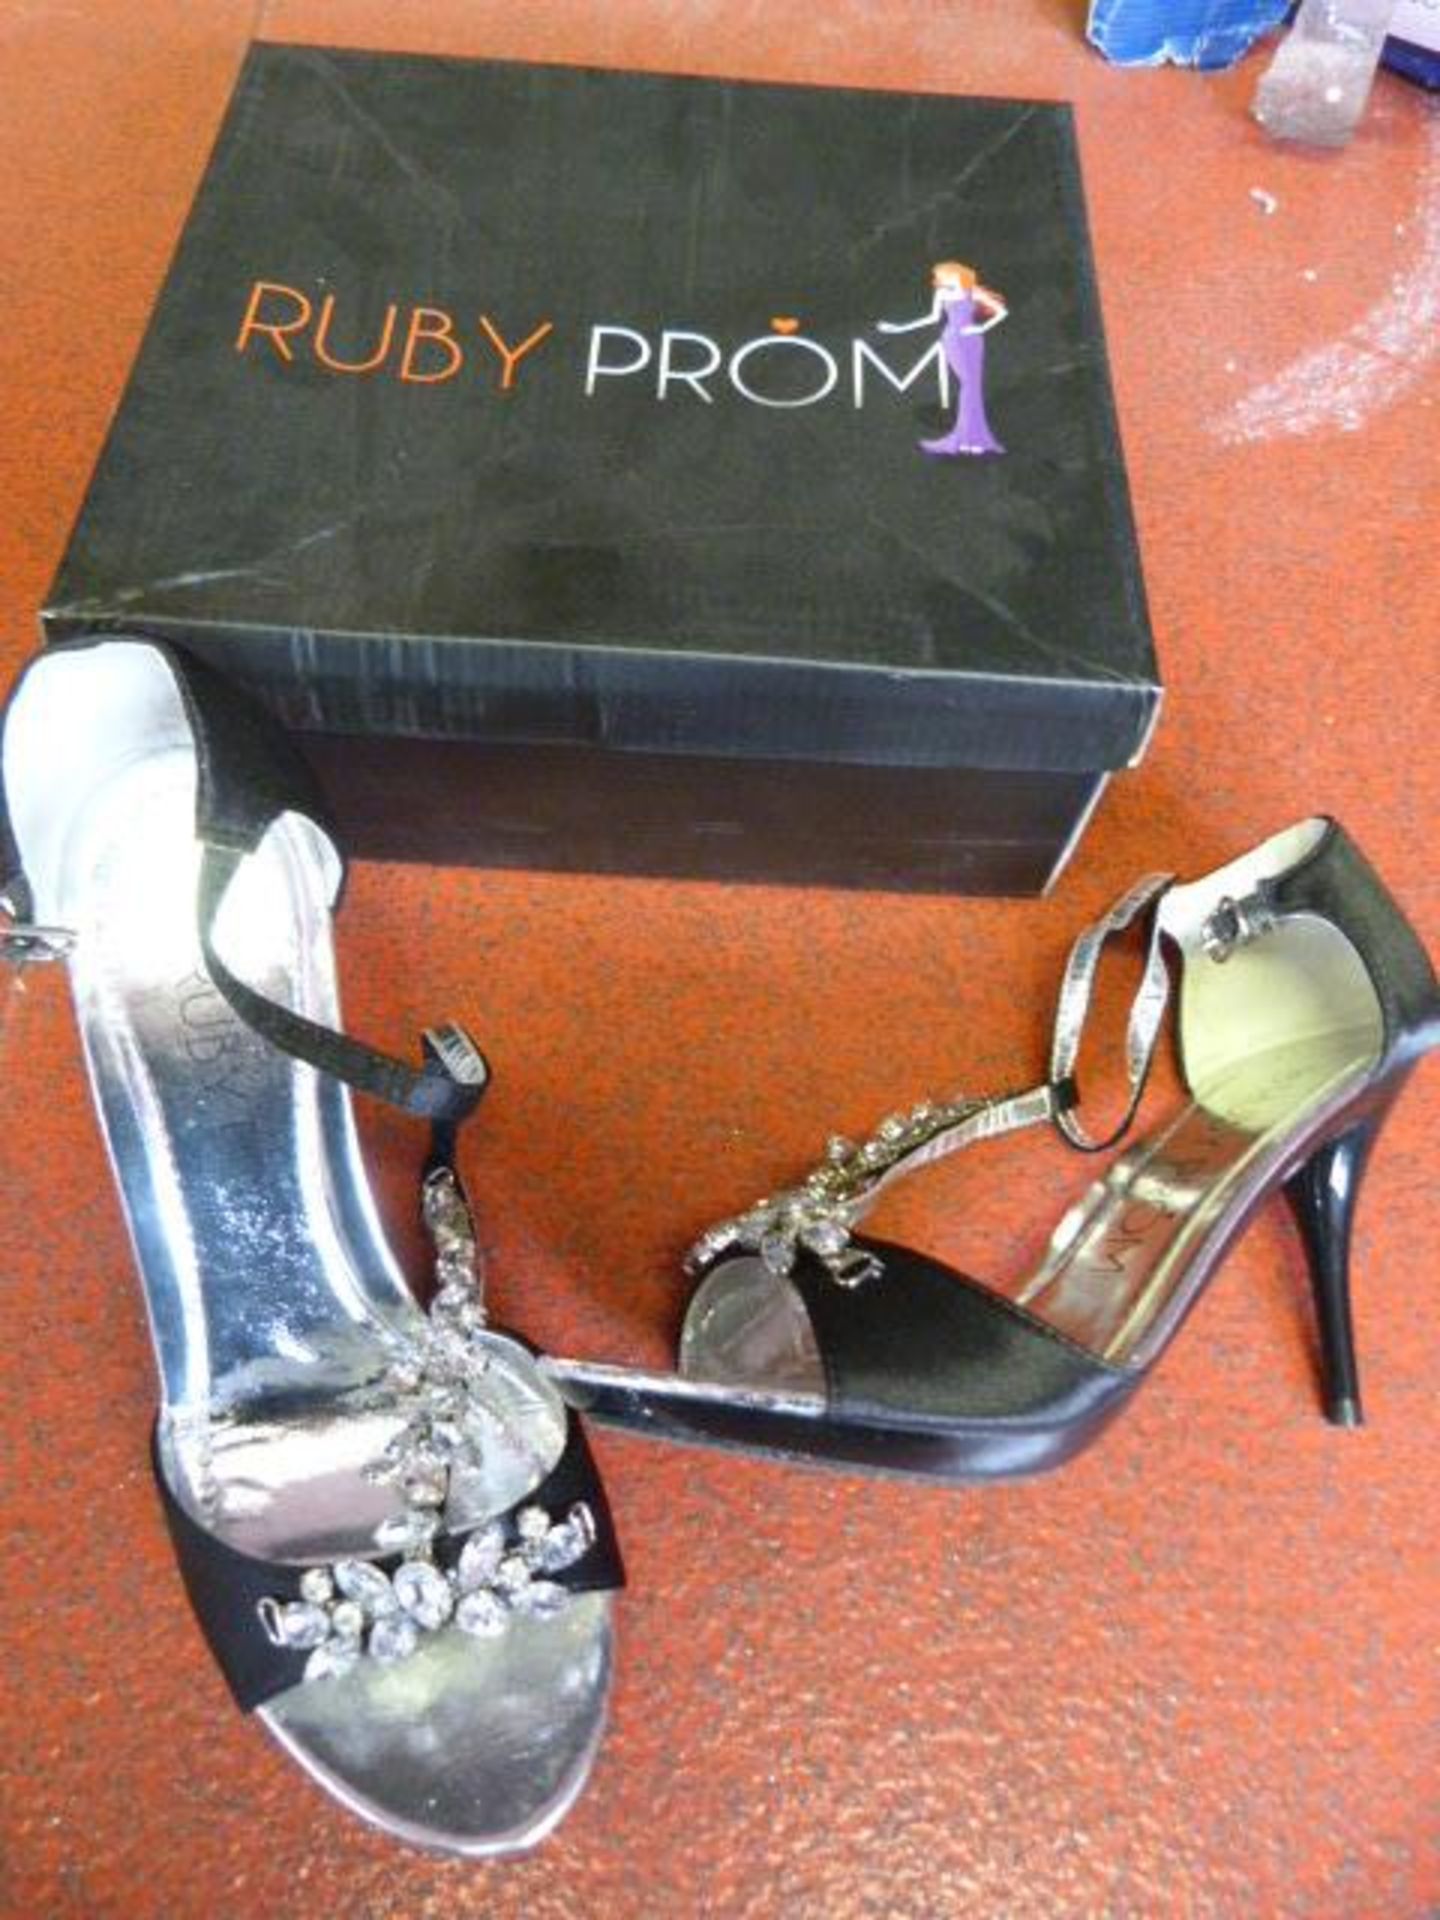 *Six Pairs of Ruby Prom Heidi Black Prom Shoes (M